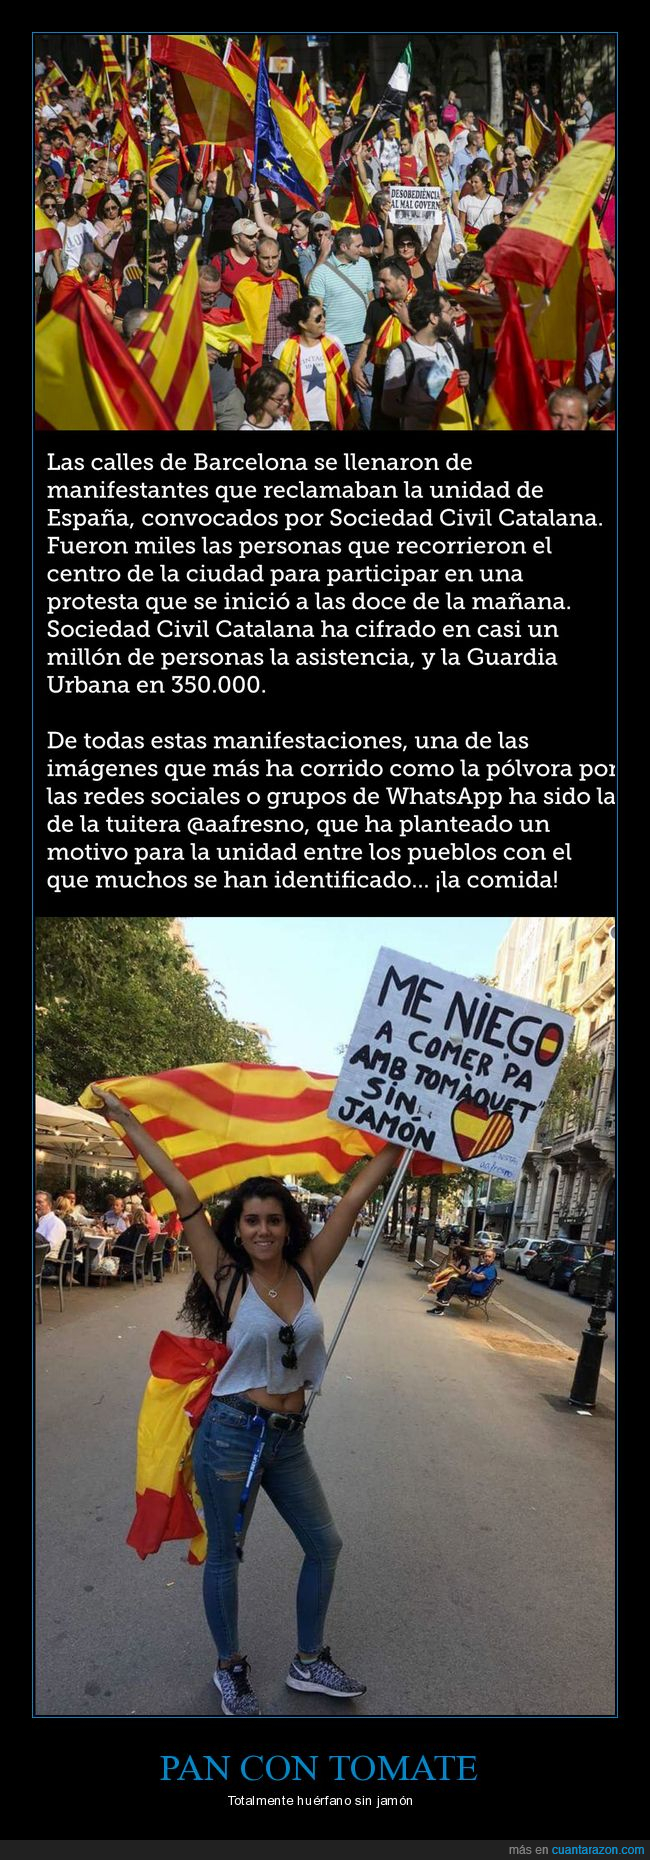 pancarta,pa amb tomàquet,jamón,unidad,españa,independencia,catalunya